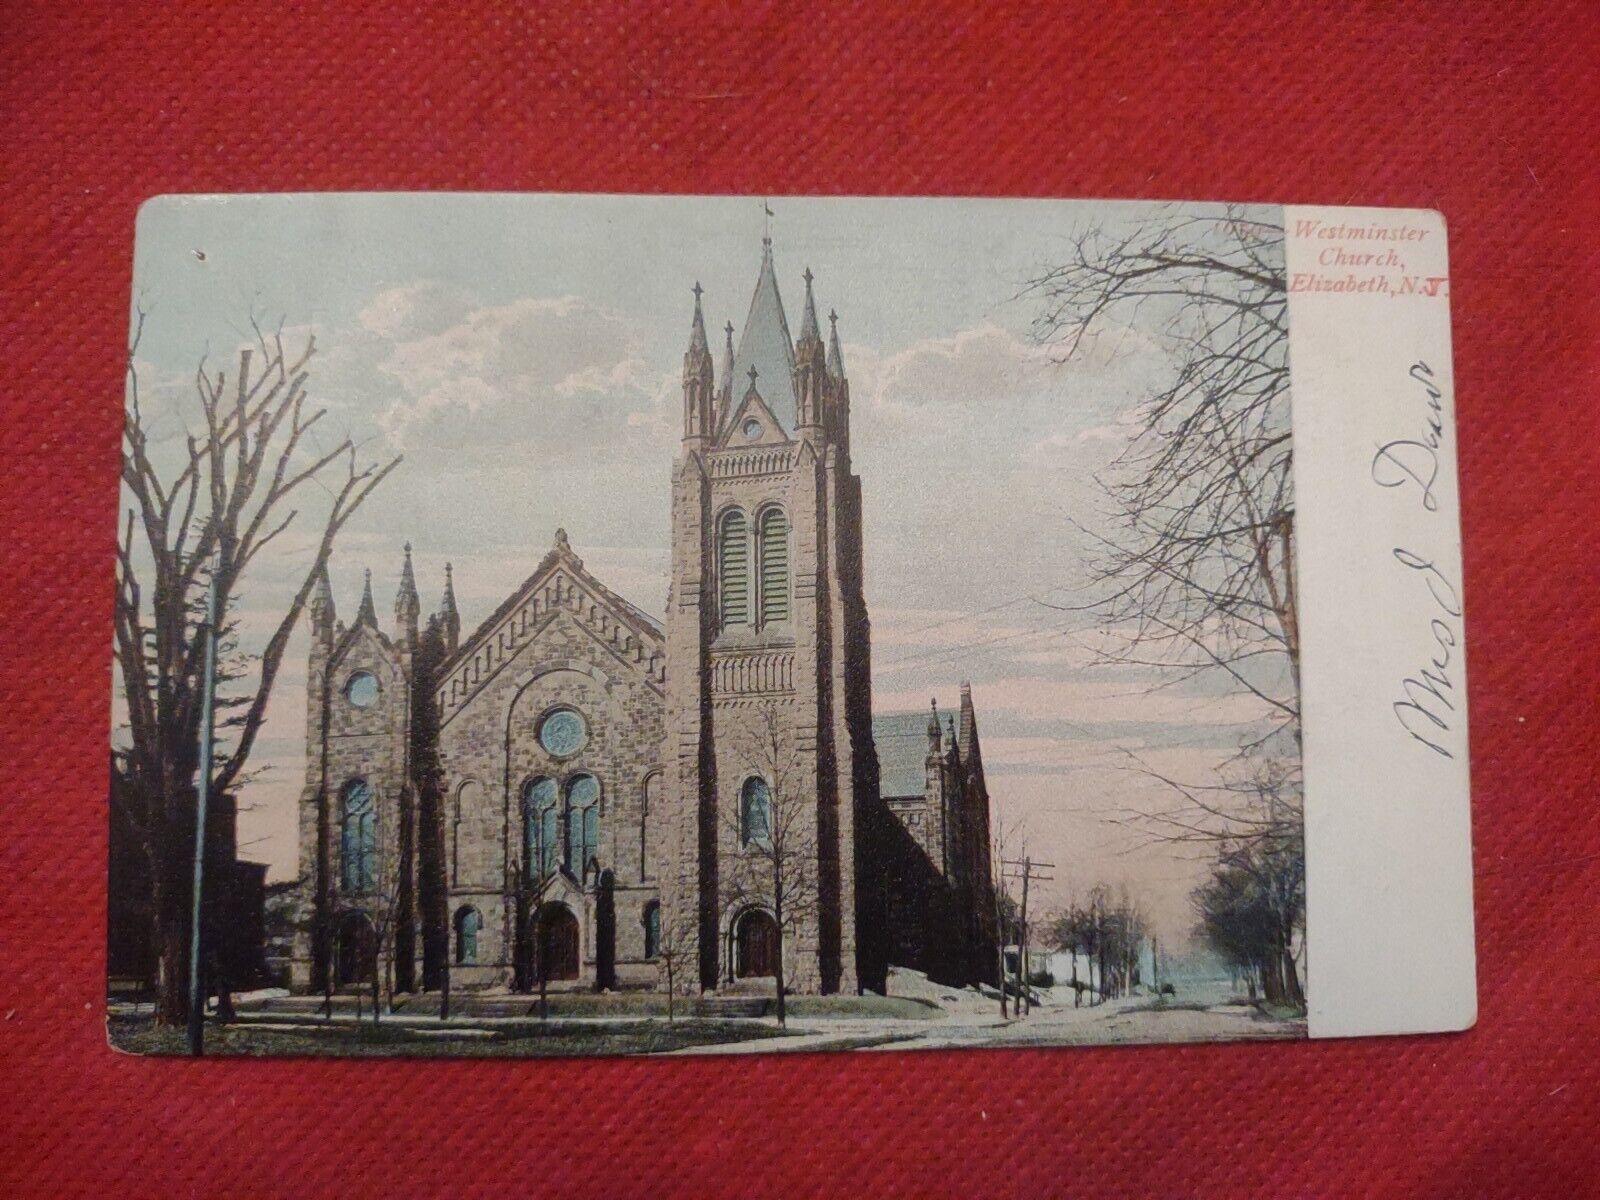 Postcard Westminster Church Elizabeth N.J. Vintage